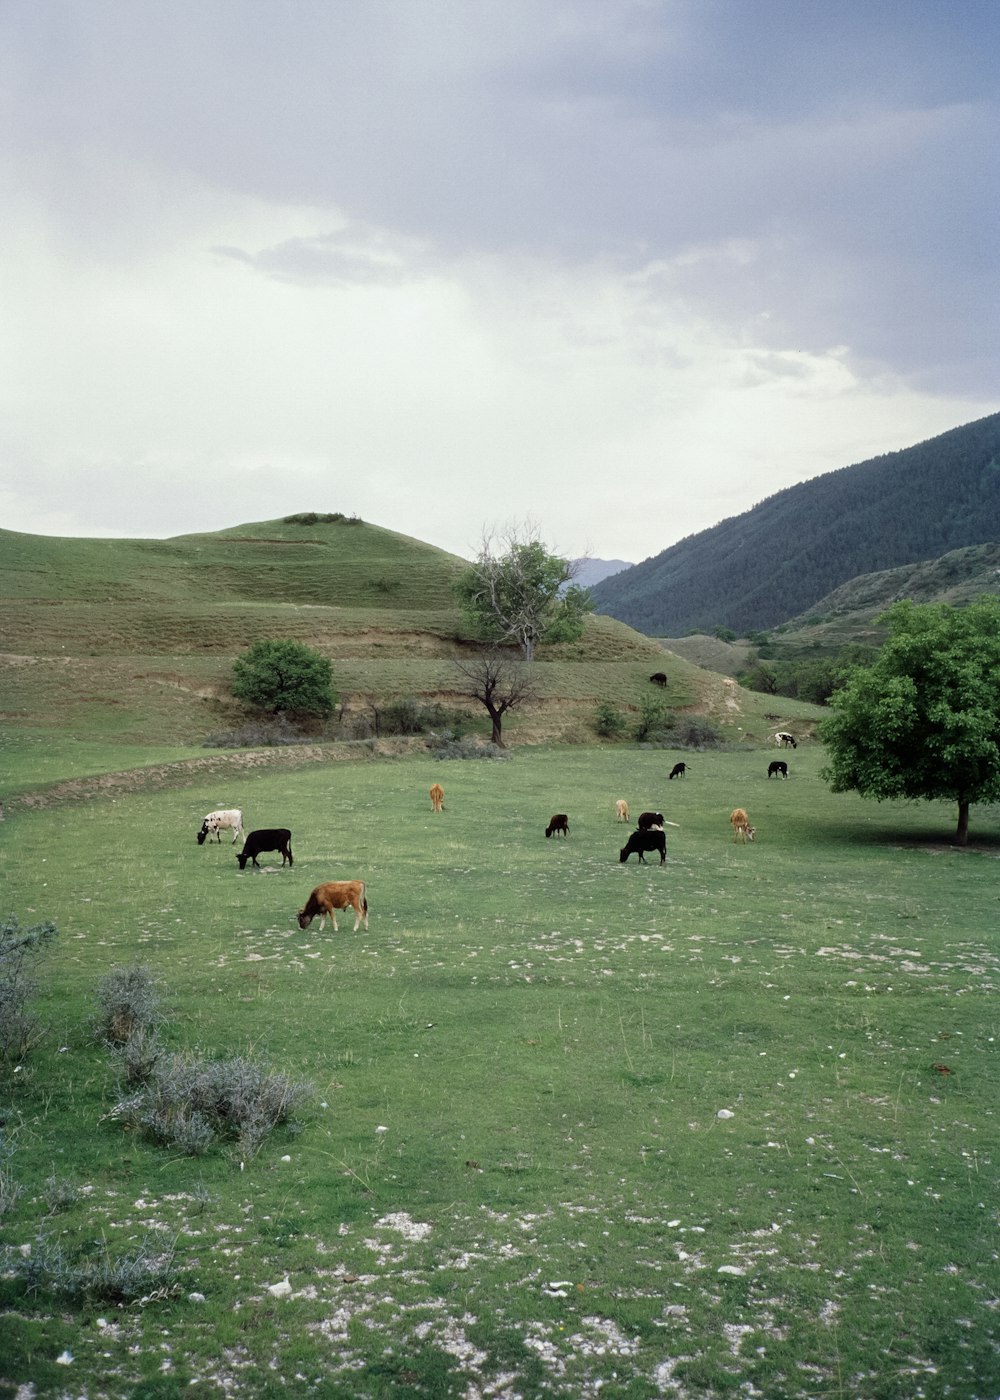 herd of sheep on green grass field near green mountain during daytime